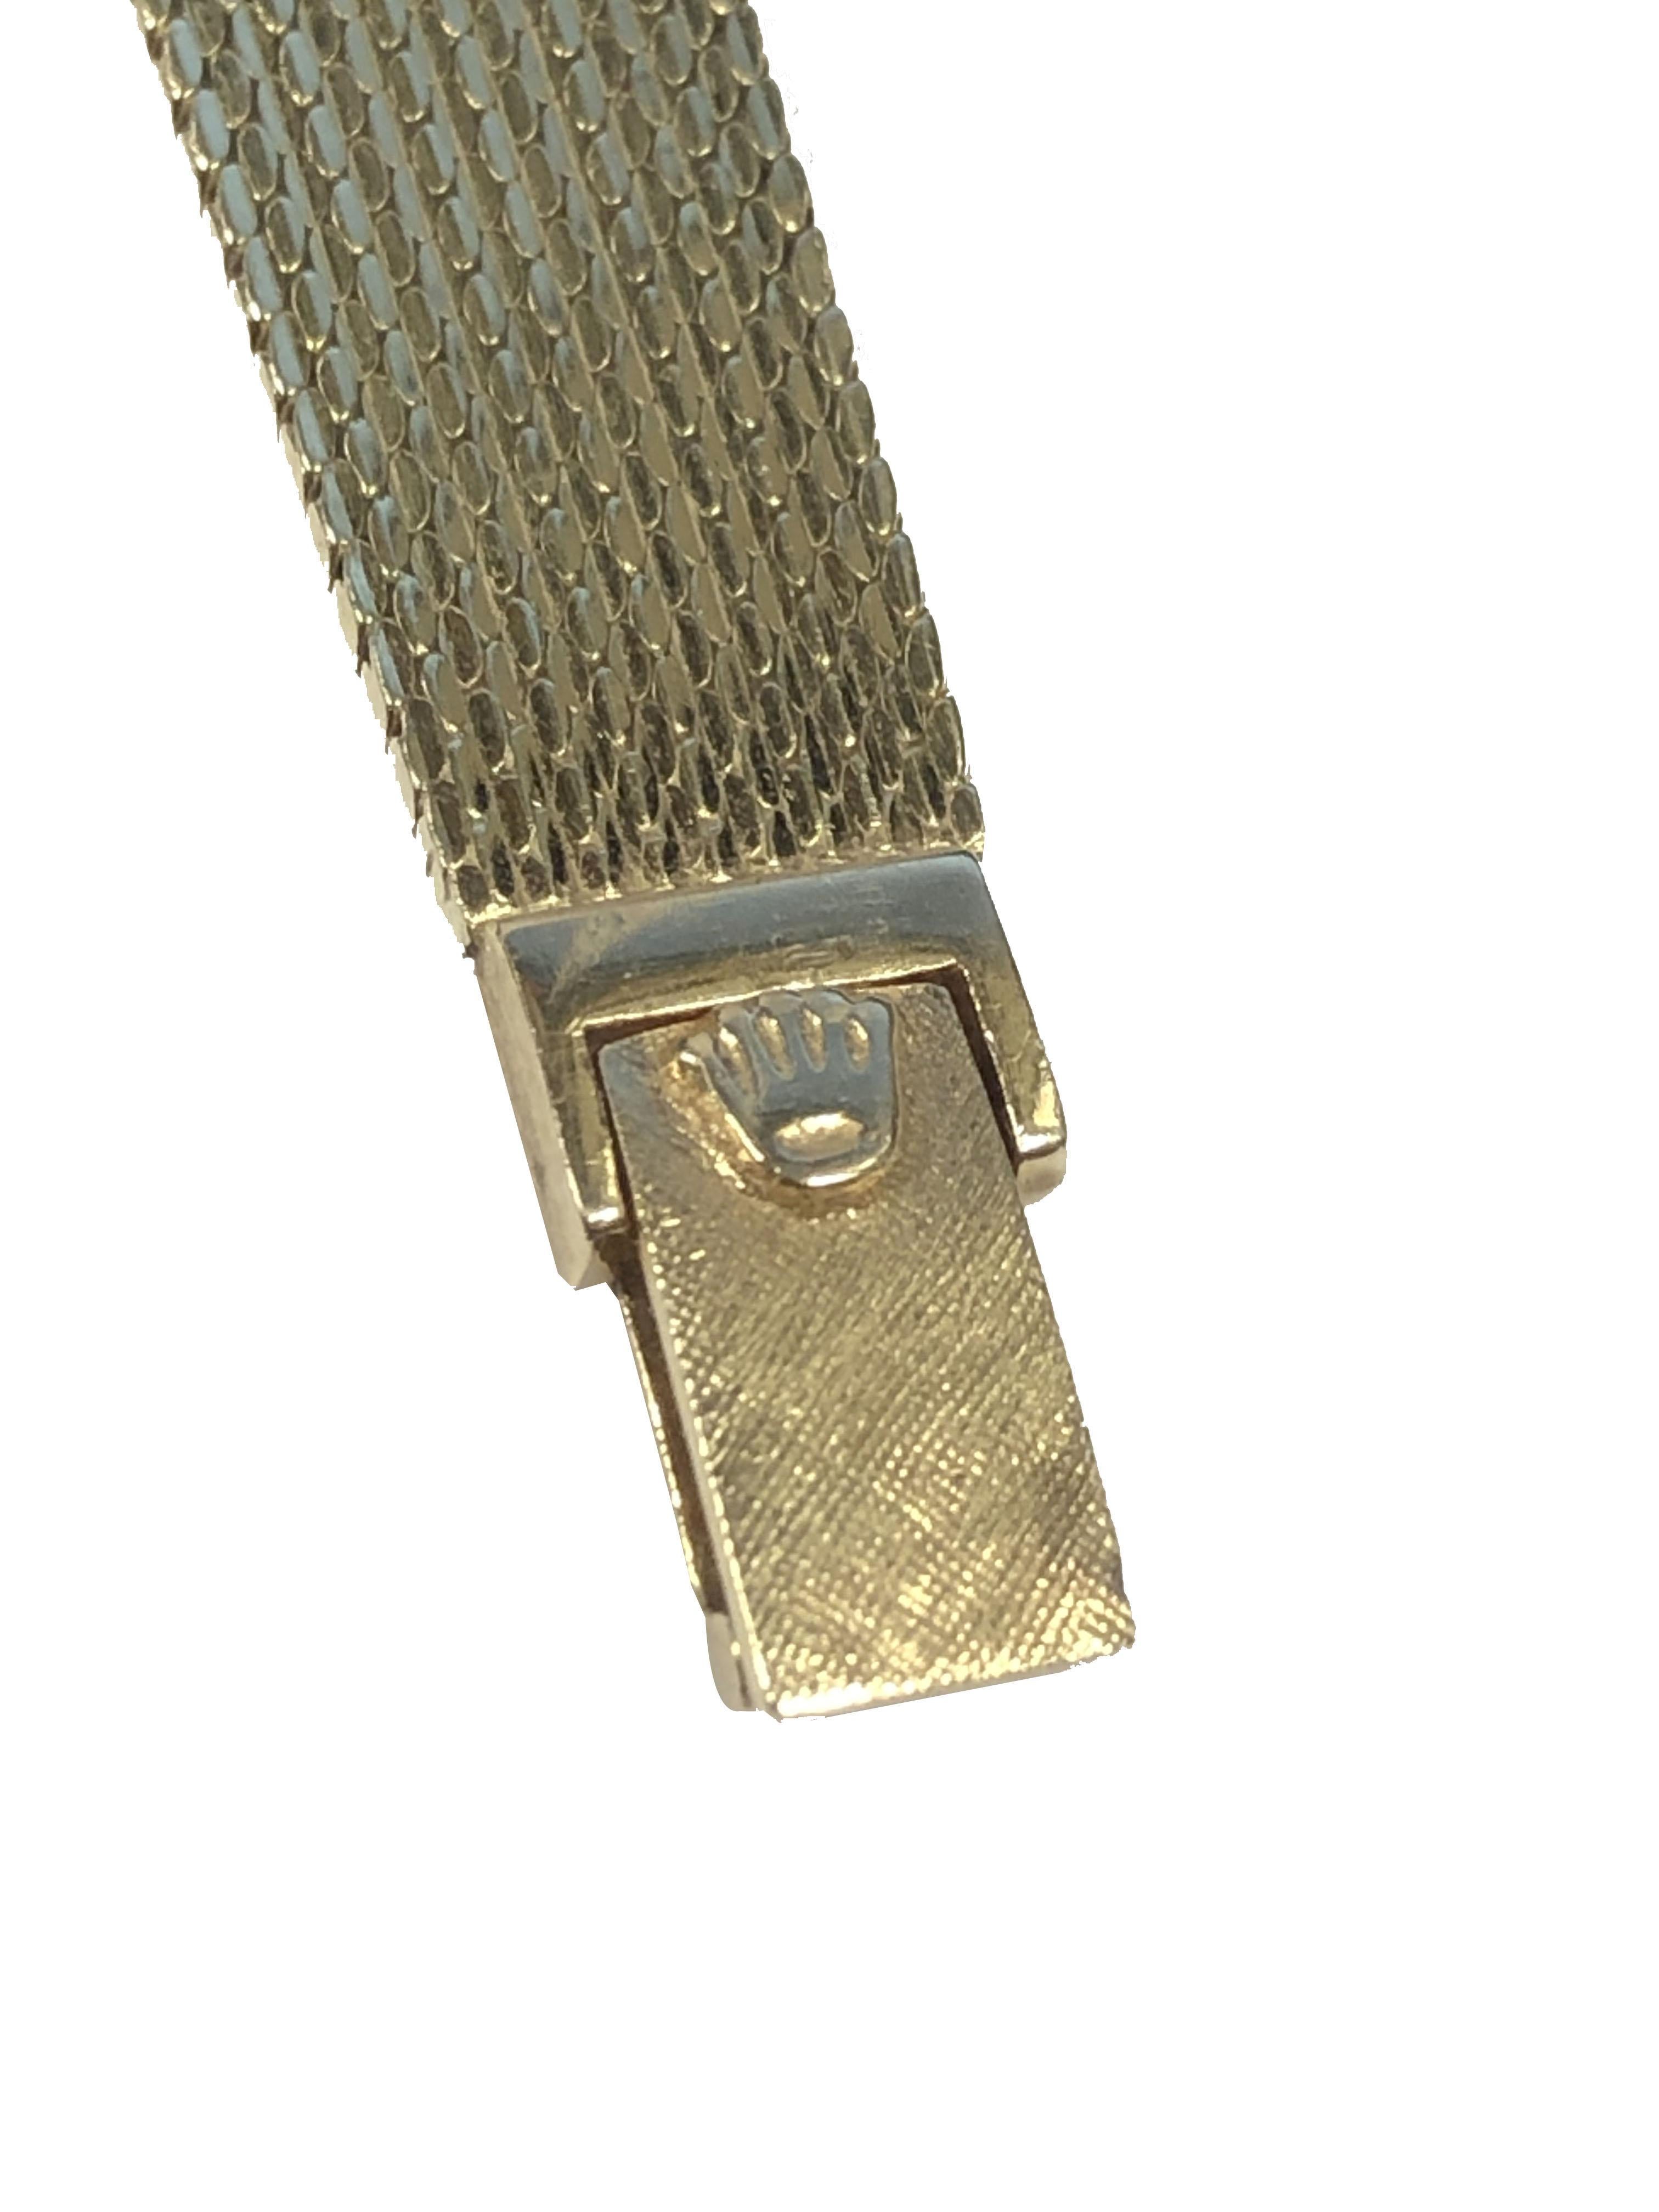 Rolex Chameleon Vintage Ladies Interchangeable Wrist Watch All Complete 5